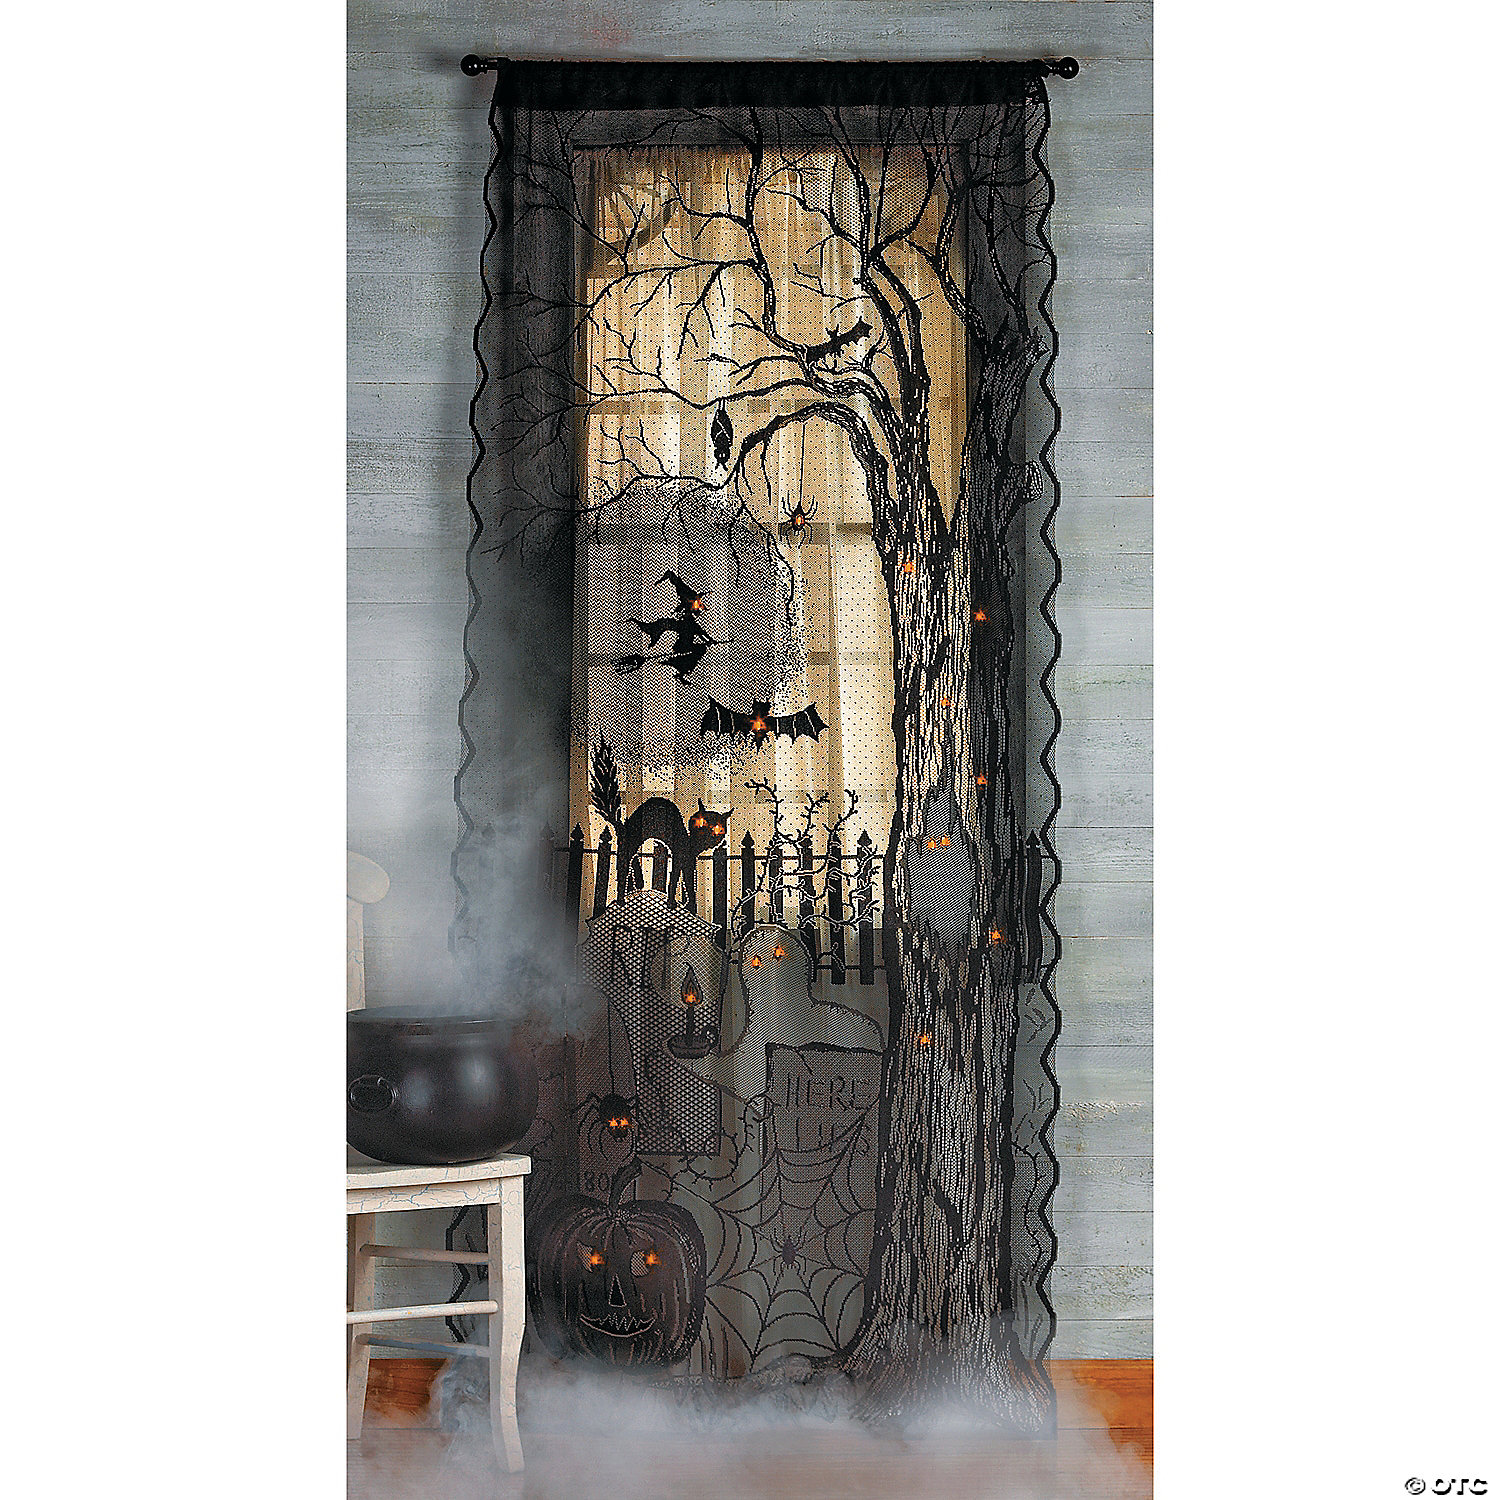 Details about   Black Bats Halloween Lace Window Curtain Spooky Spider Web Home Decoration US 